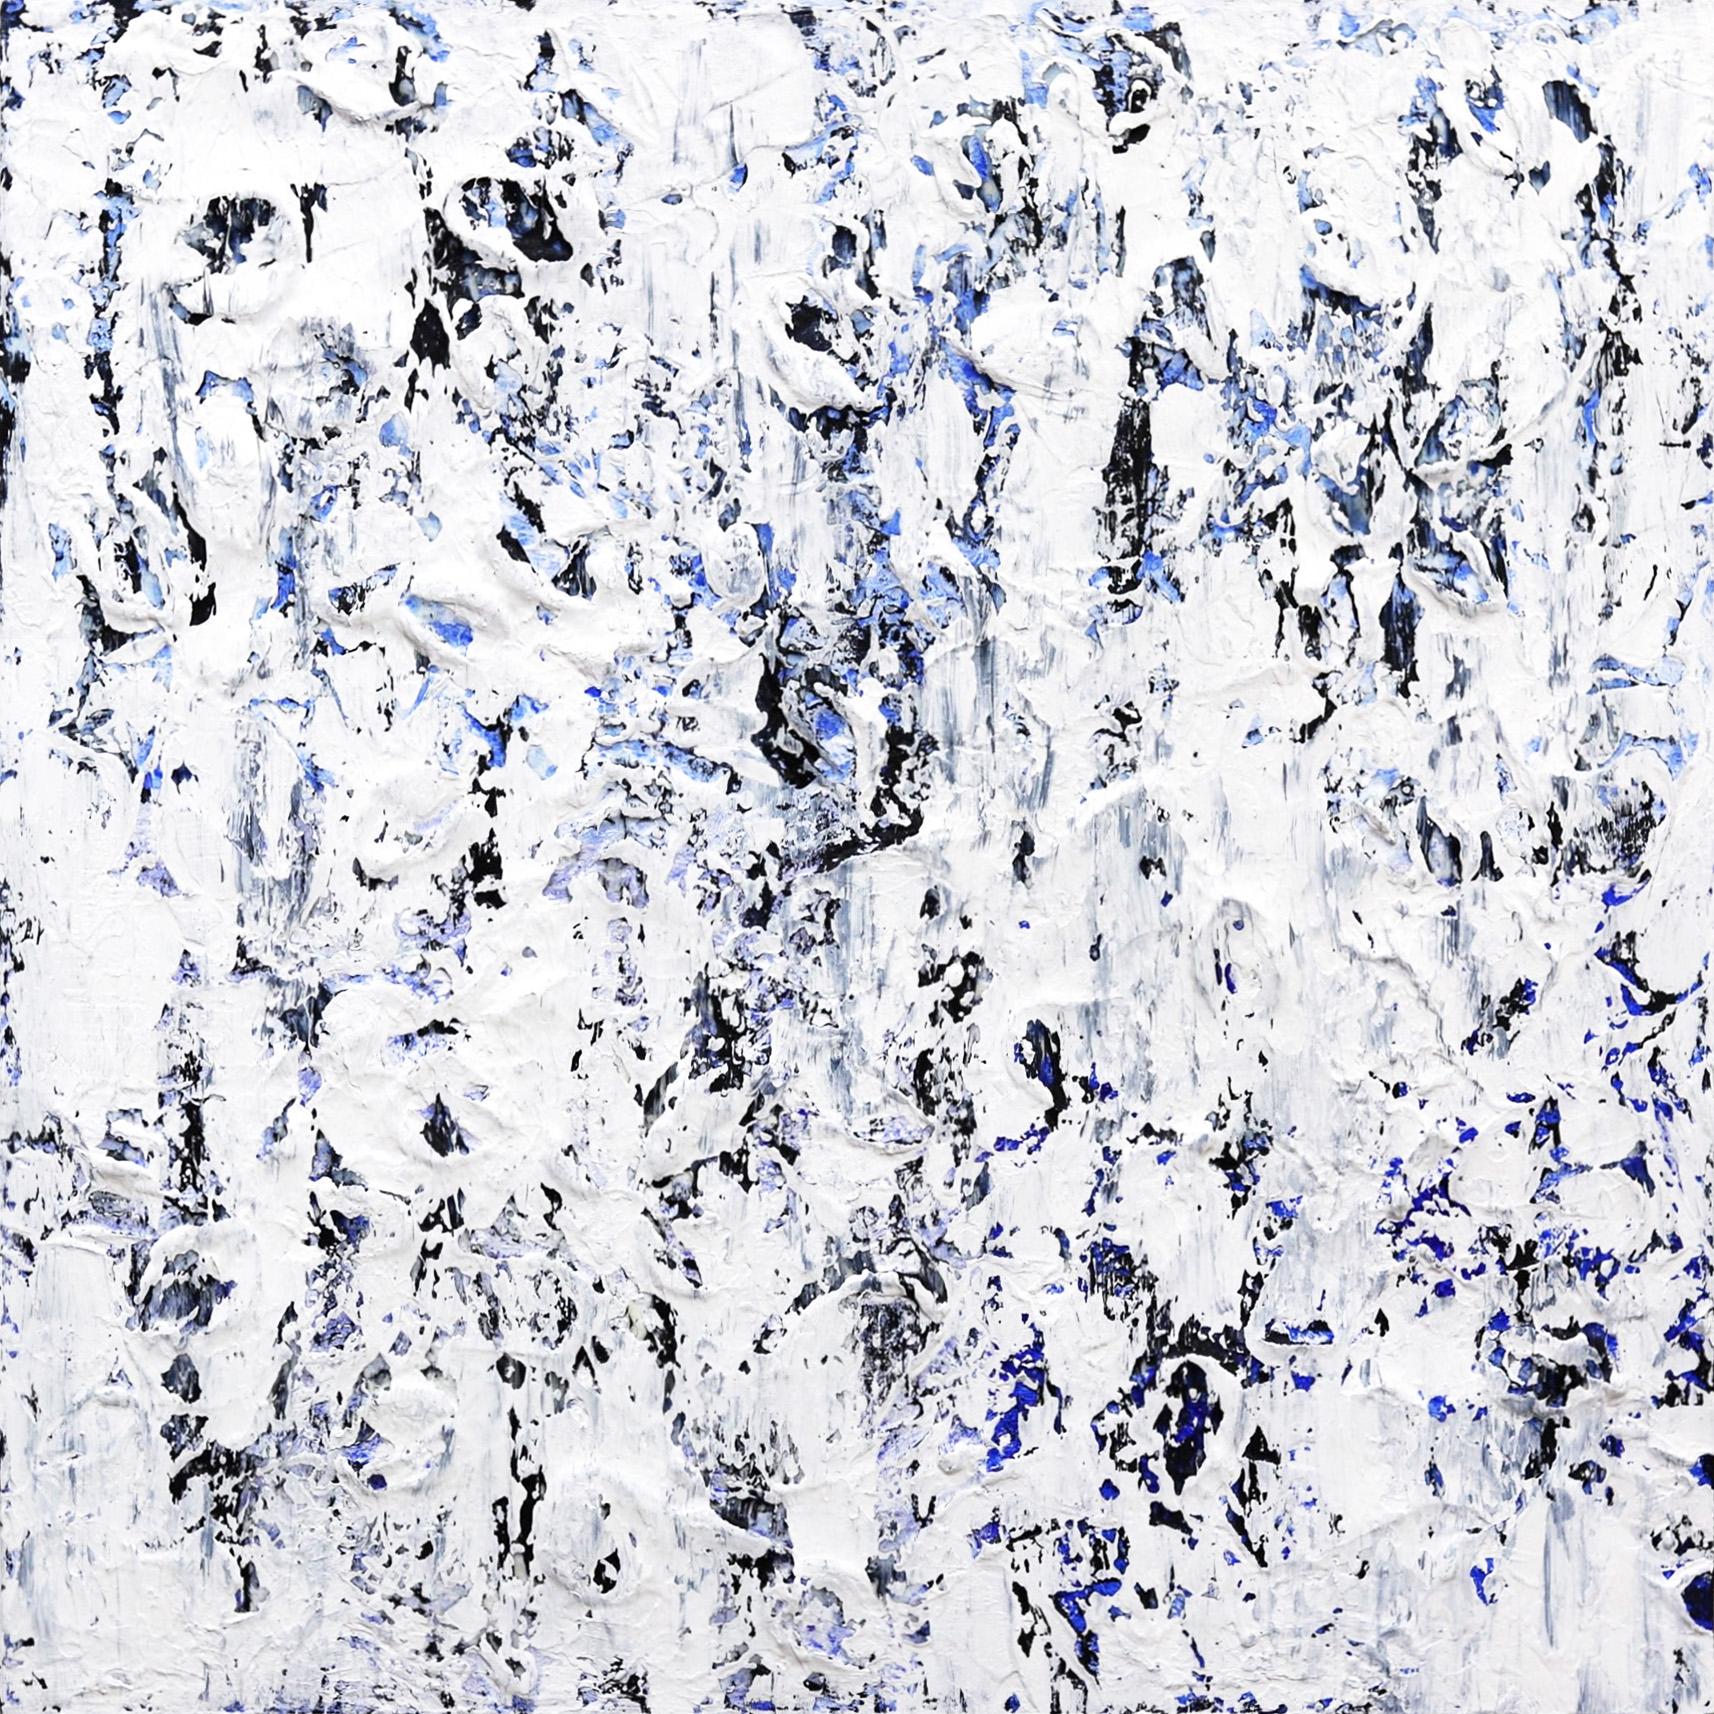 Clara Berta Abstract Painting - Happiness on Sunday - Textured White Blue Waterfall Abstract Minimalist Painting